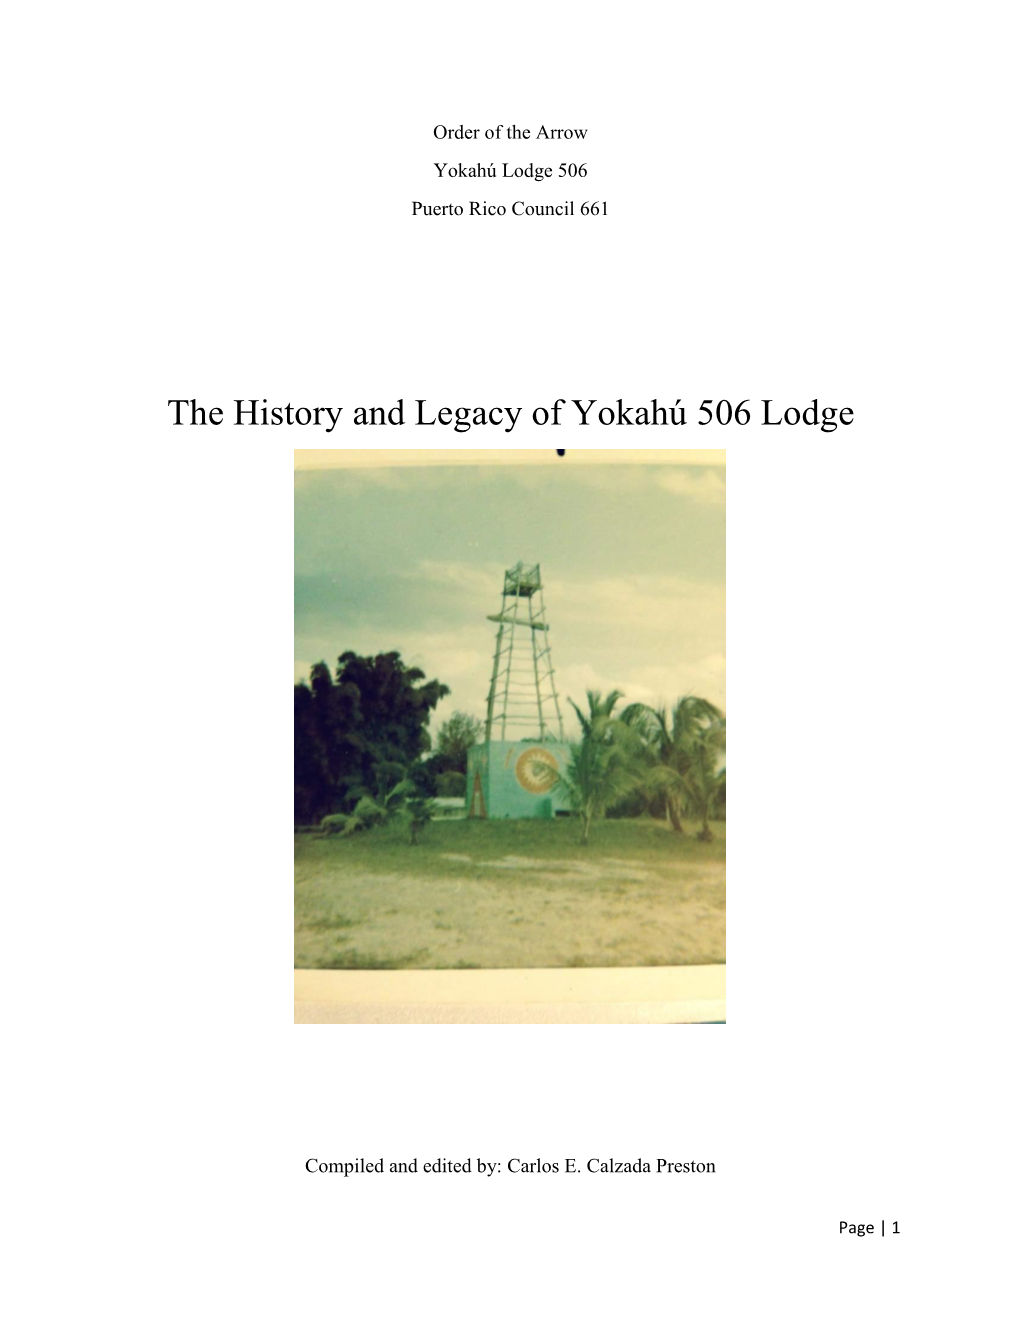 The History and Legacy of Yokahú 506 Lodge